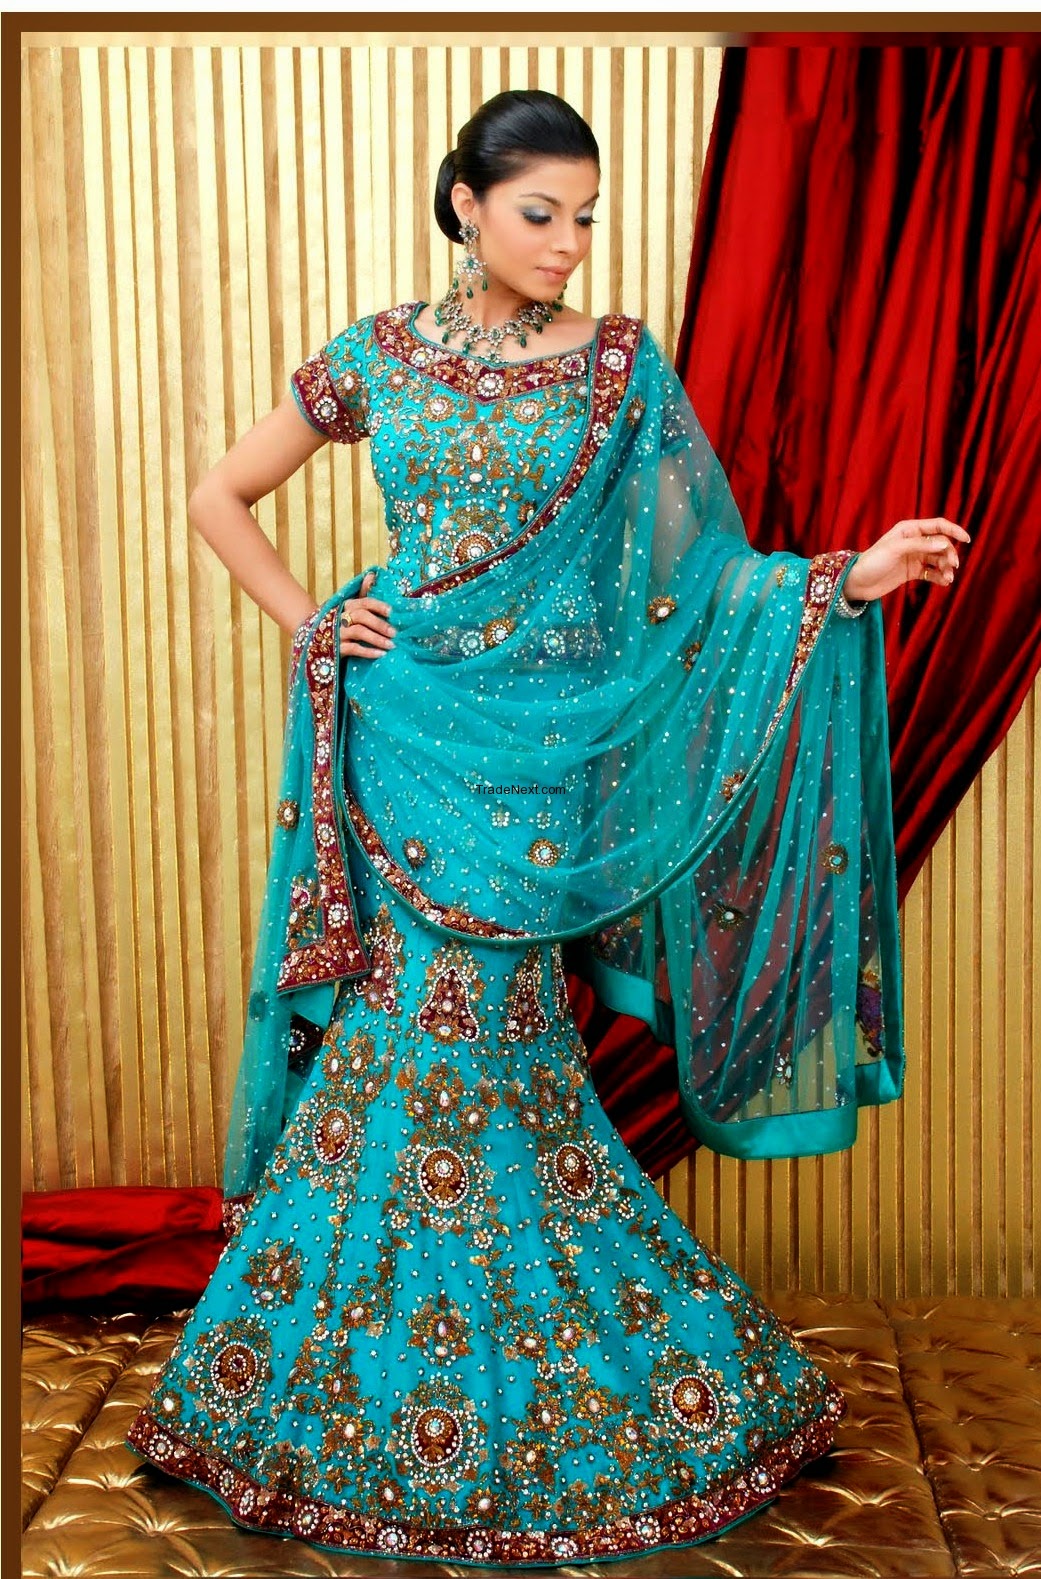 New Pakiastani Dulhan Lehengas Walima Dresses 2014-2015 - Dulhan Dress Pic Download , HD Wallpaper & Backgrounds